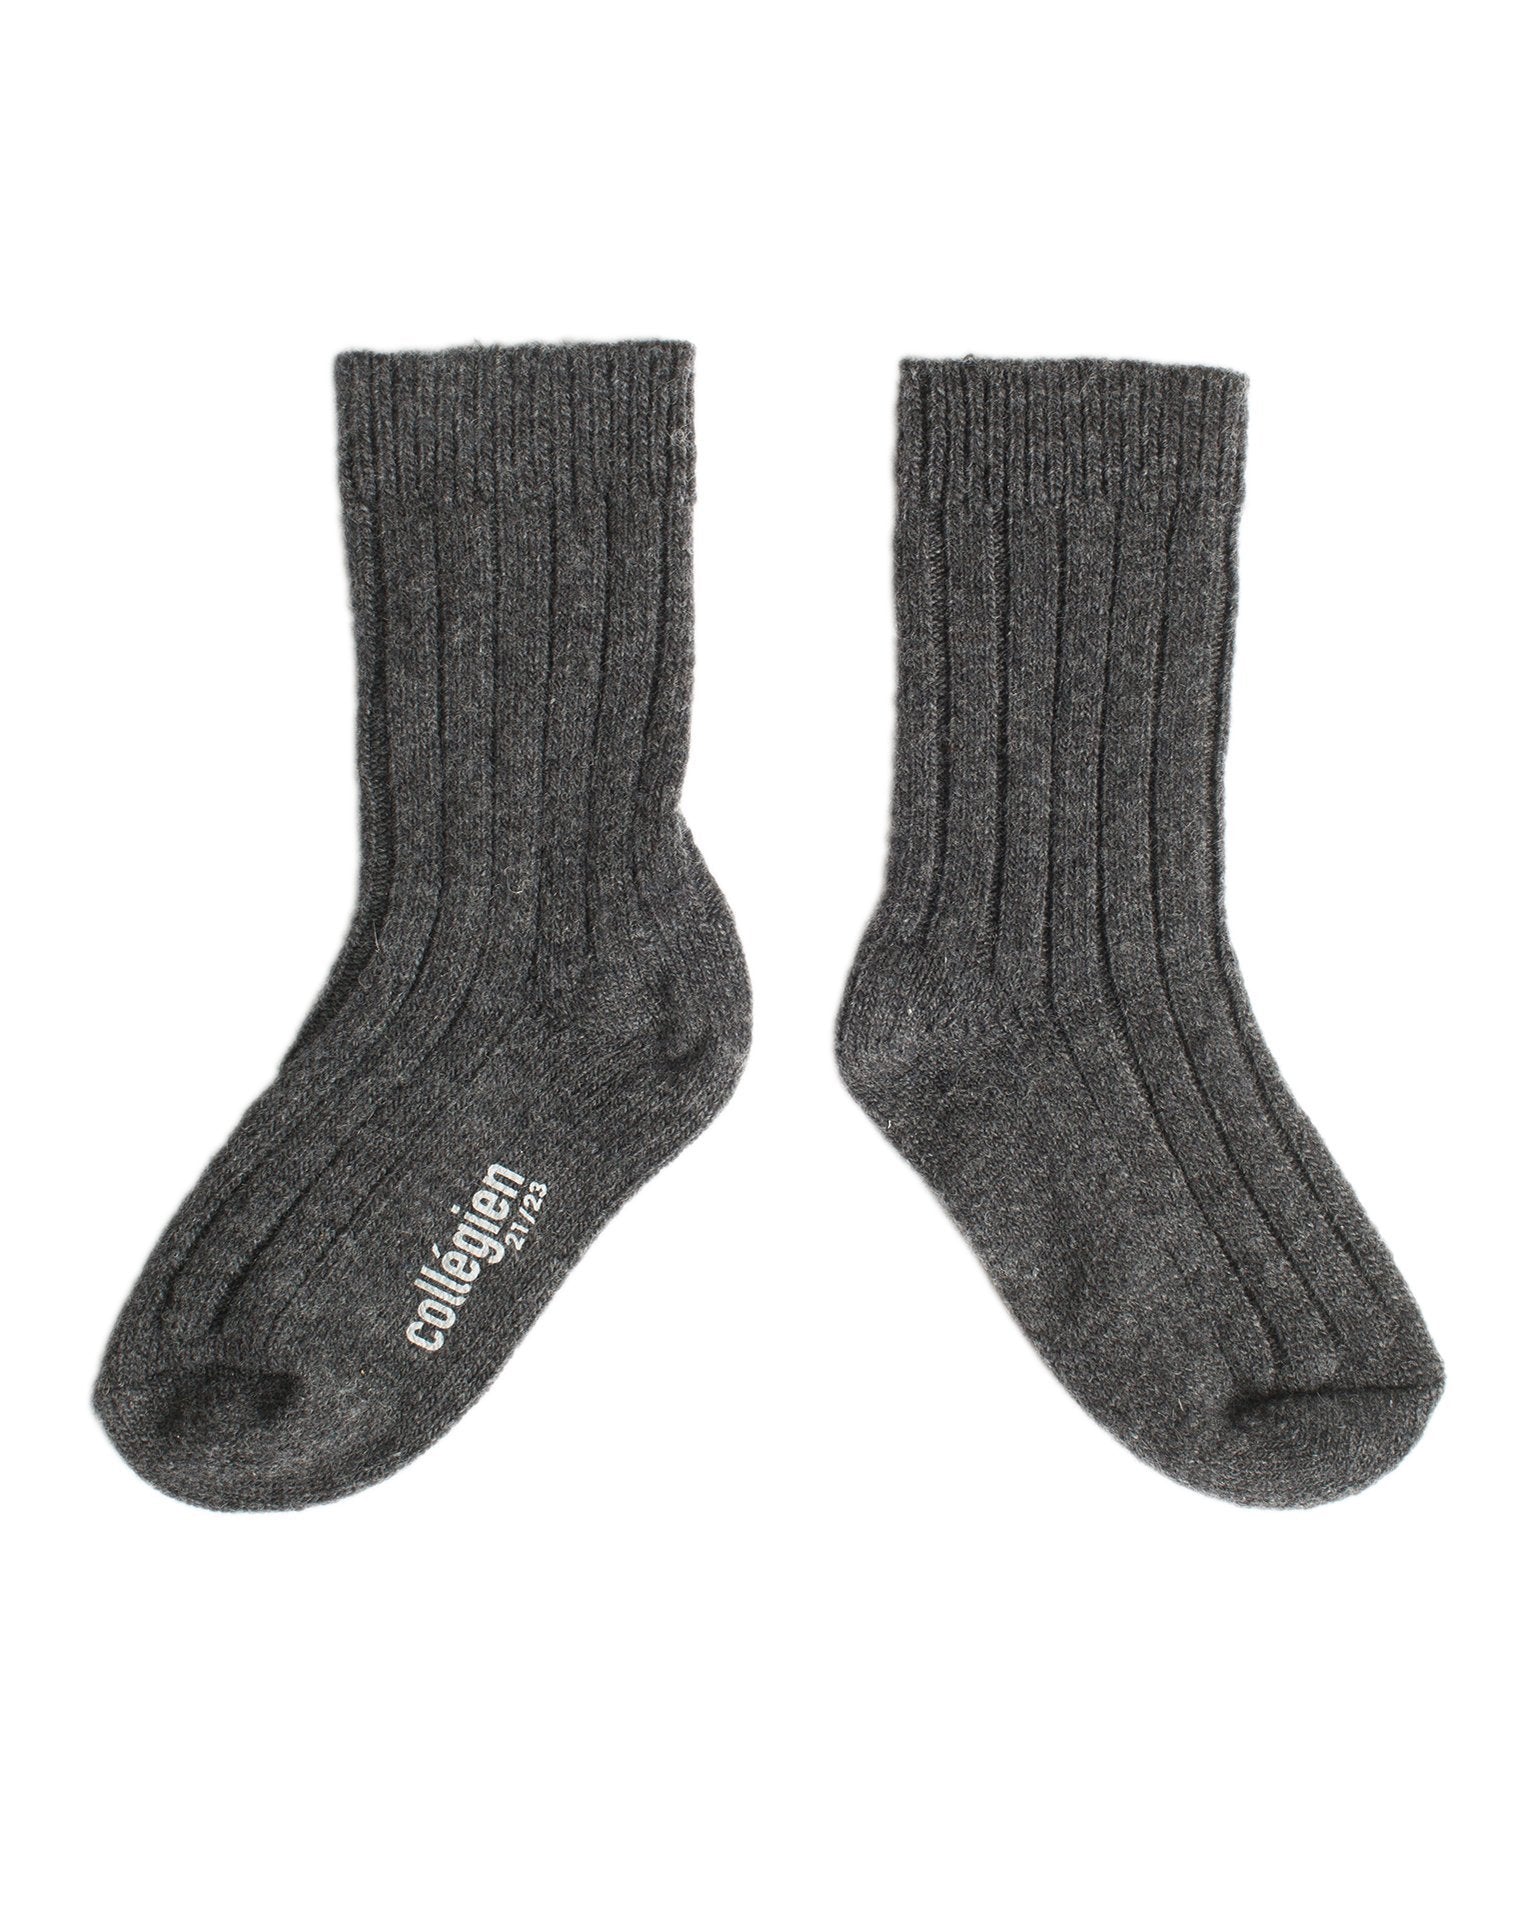 Little collegien accessories wool + cashmere socks in smoky